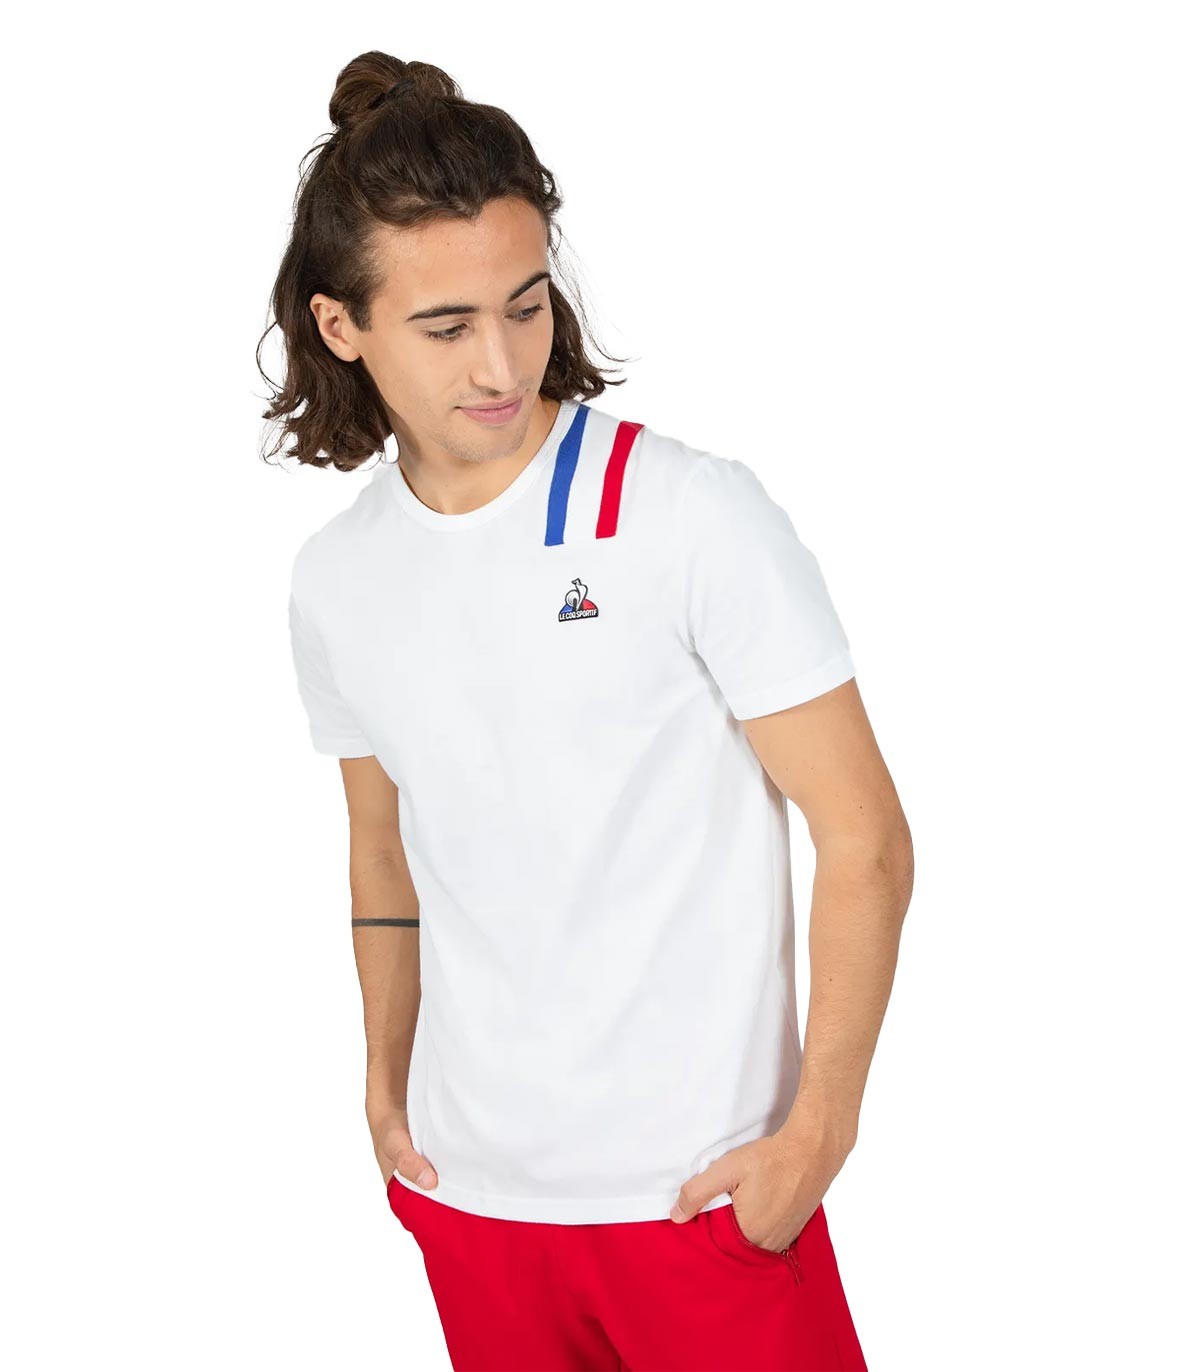 Le Coq Sportif - Camiseta Unisex Tricolore - Blanco